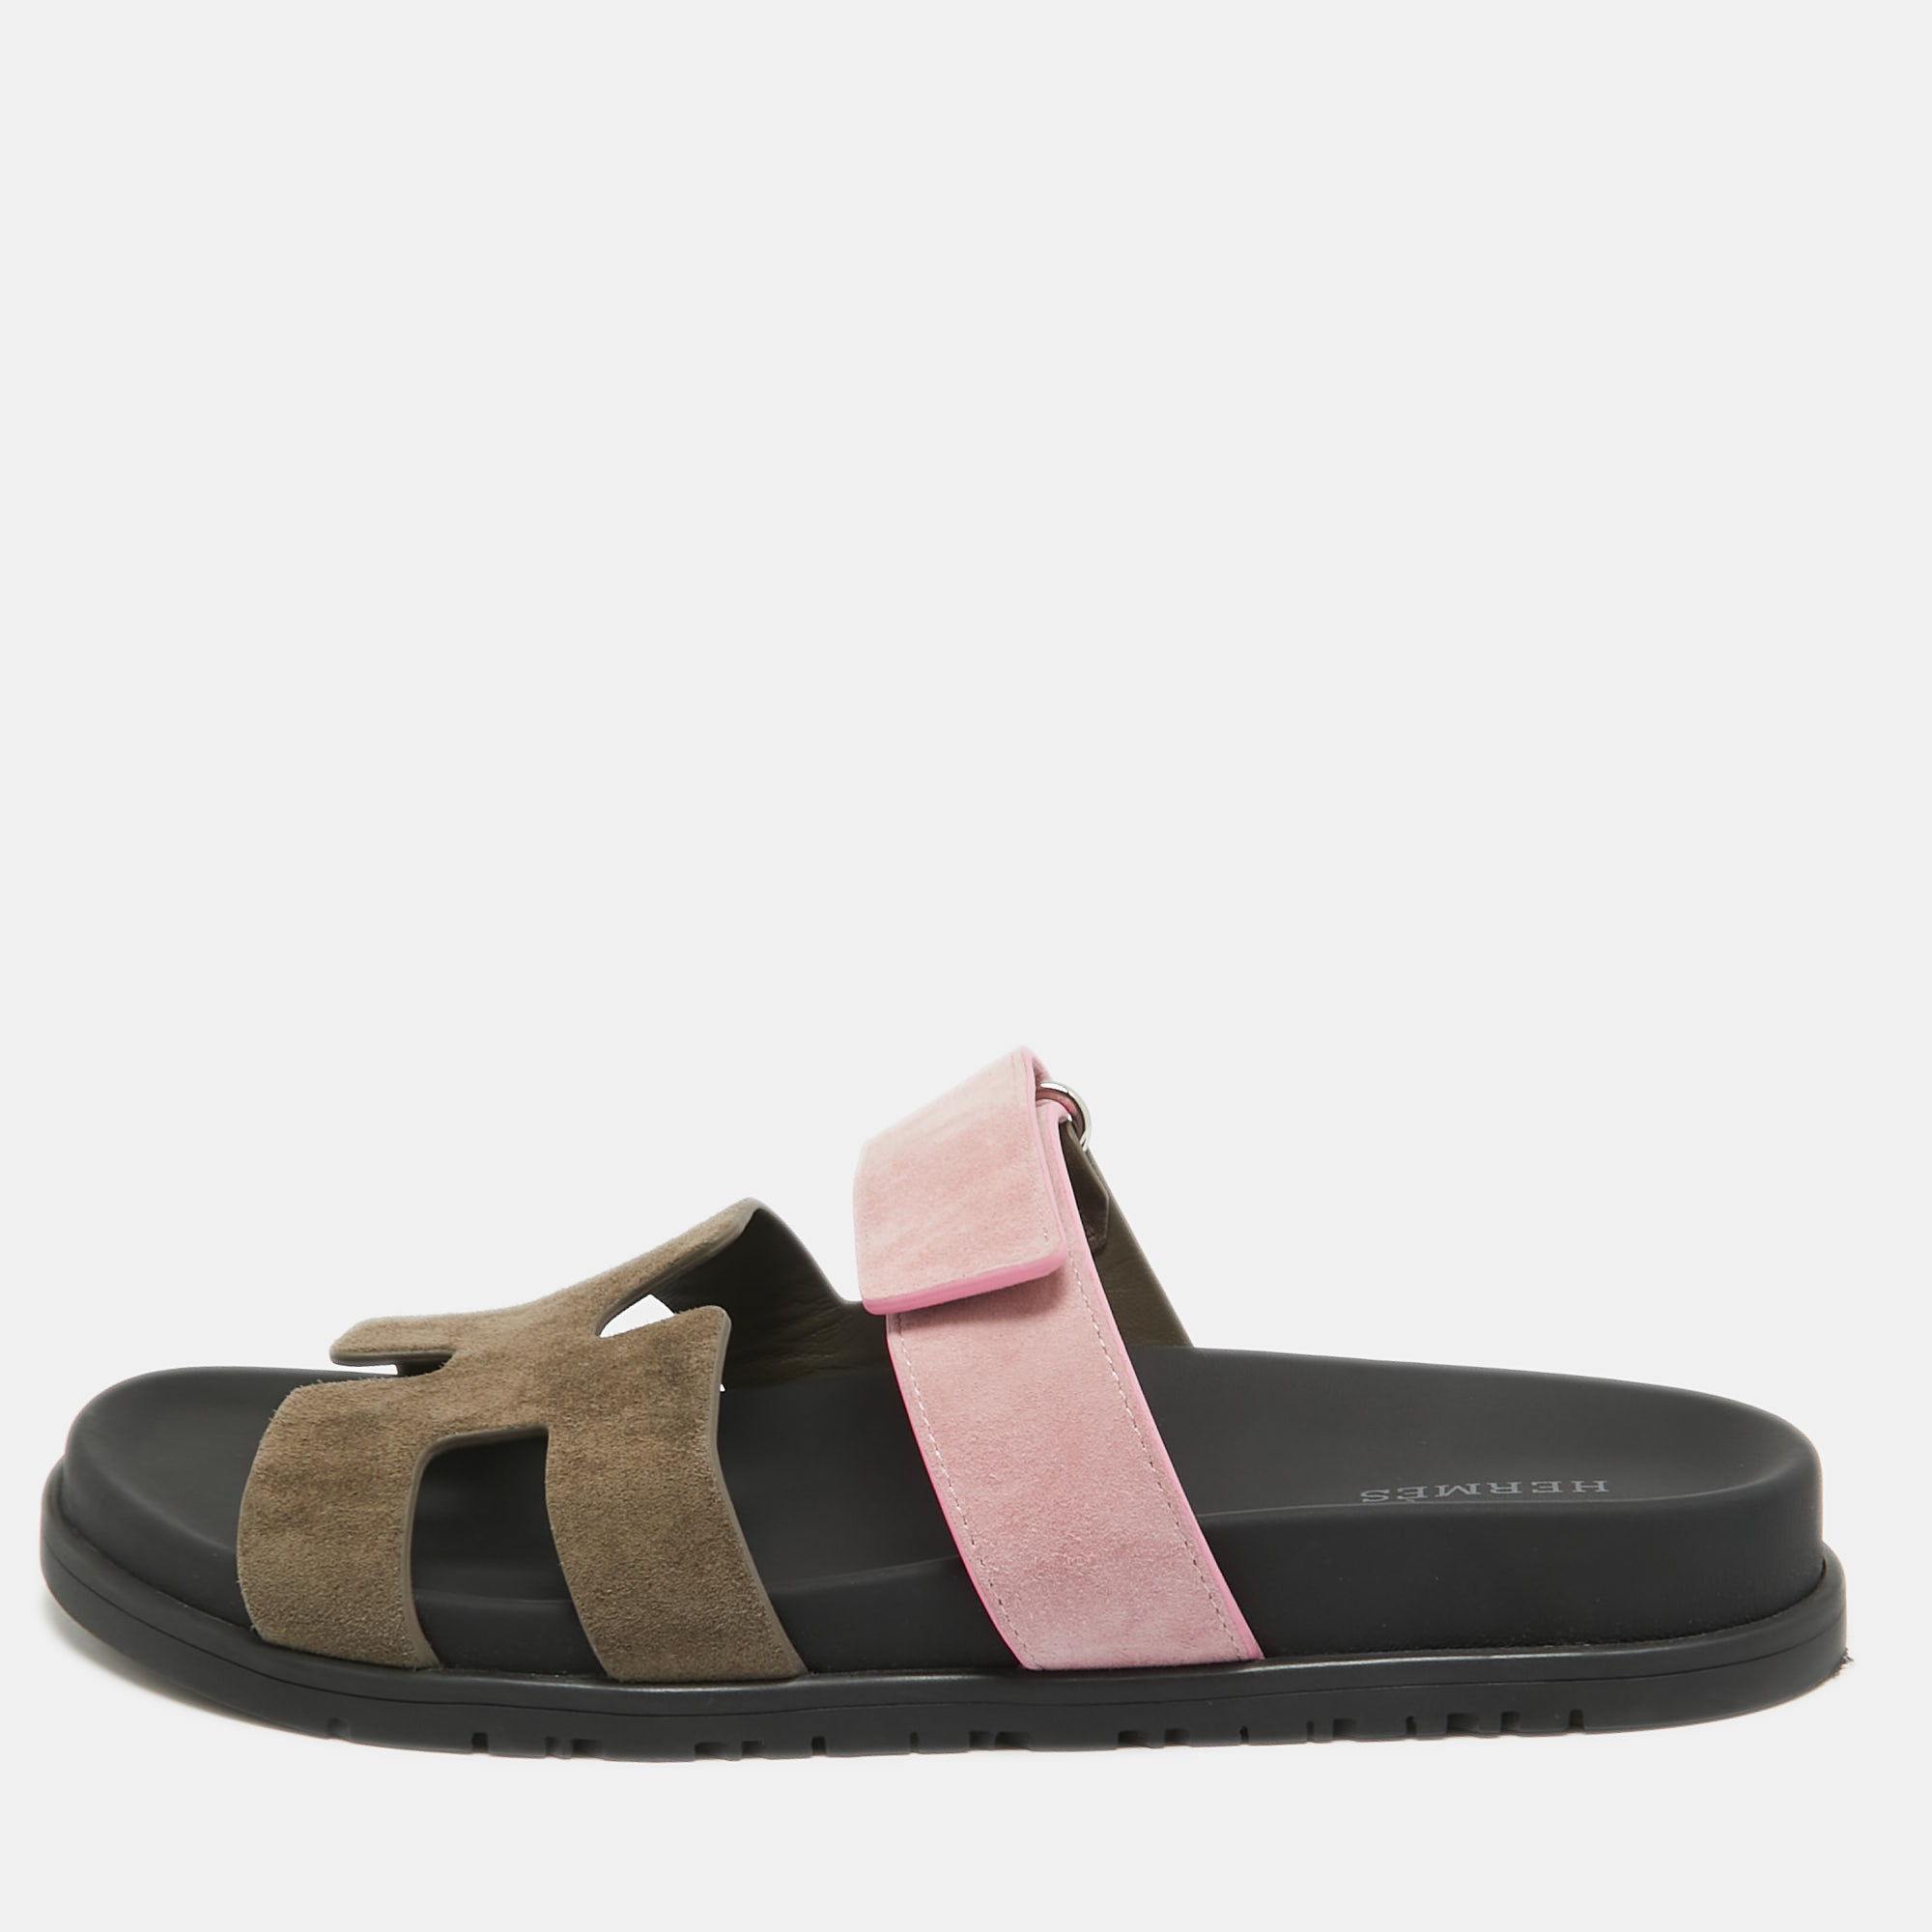 Hermès Grey/Pink Suede Chypre Slides Size 40